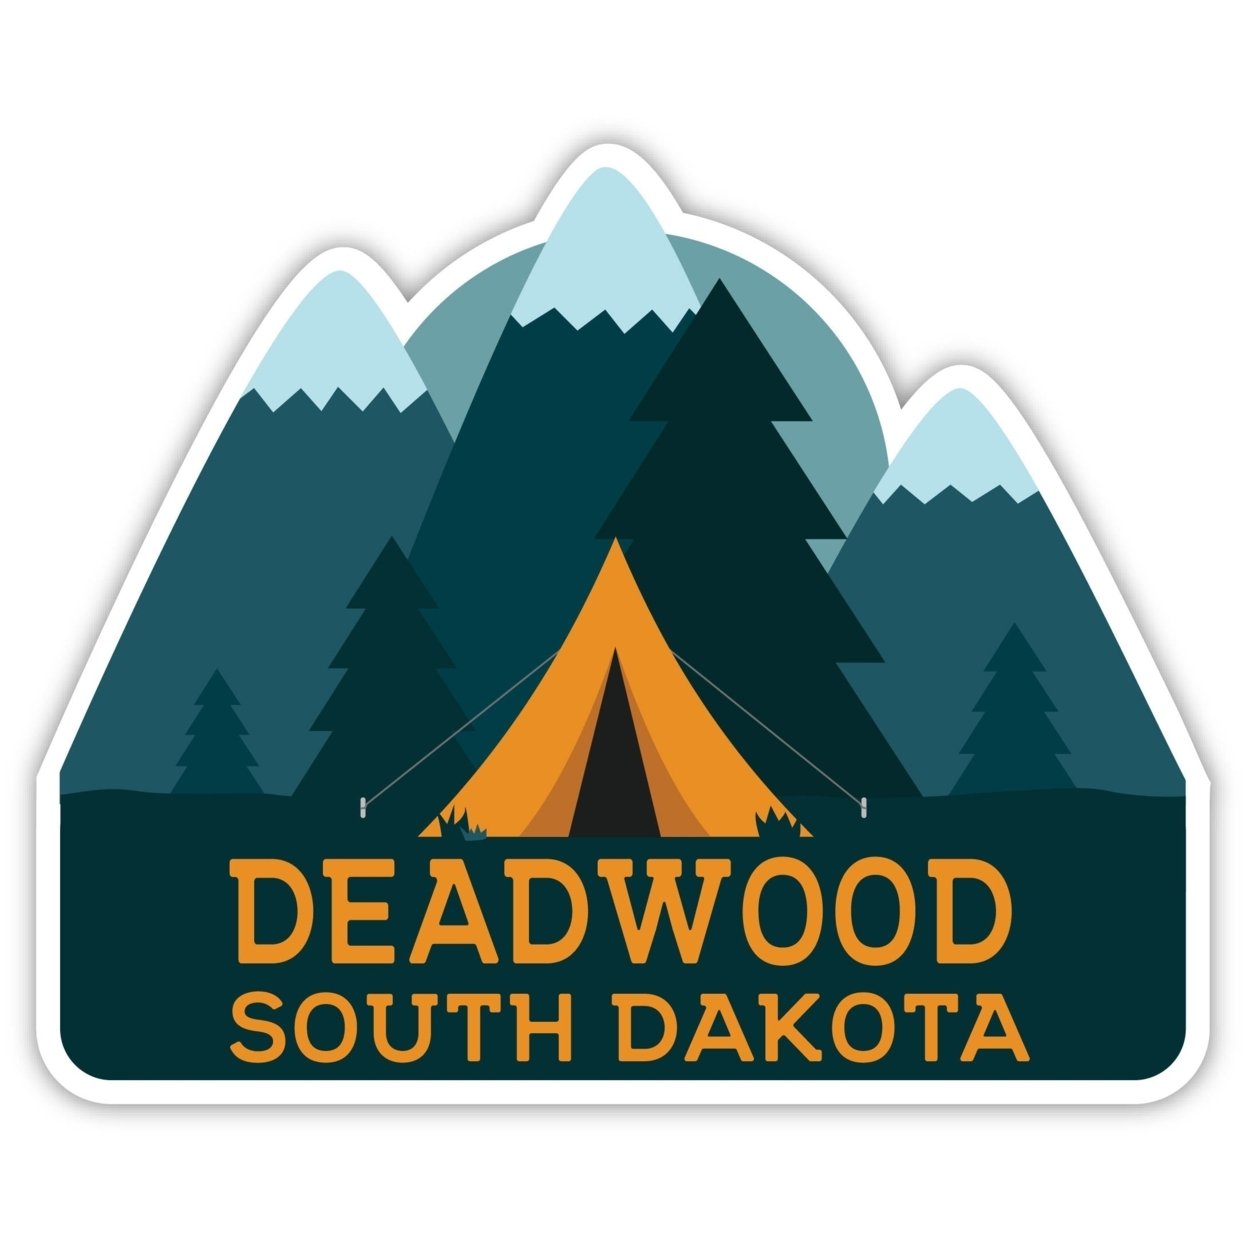 Deadwood South Dakota Souvenir Decorative Stickers (Choose Theme And Size) - 4-Pack, 10-Inch, Adventures Awaits